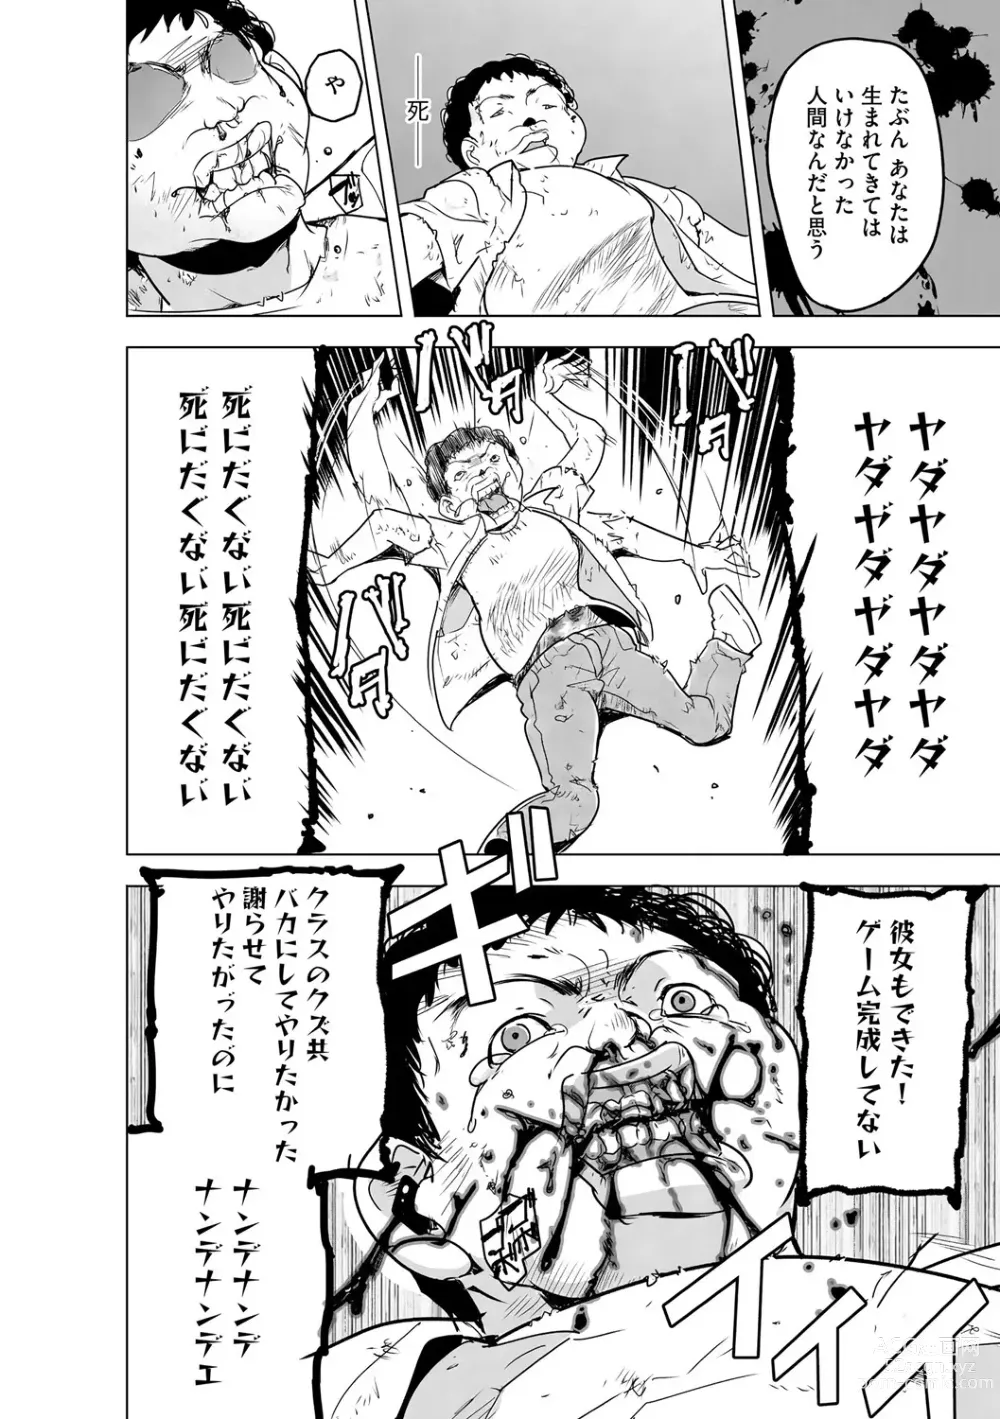 Page 342 of manga Cyberia Plus Vol. 19